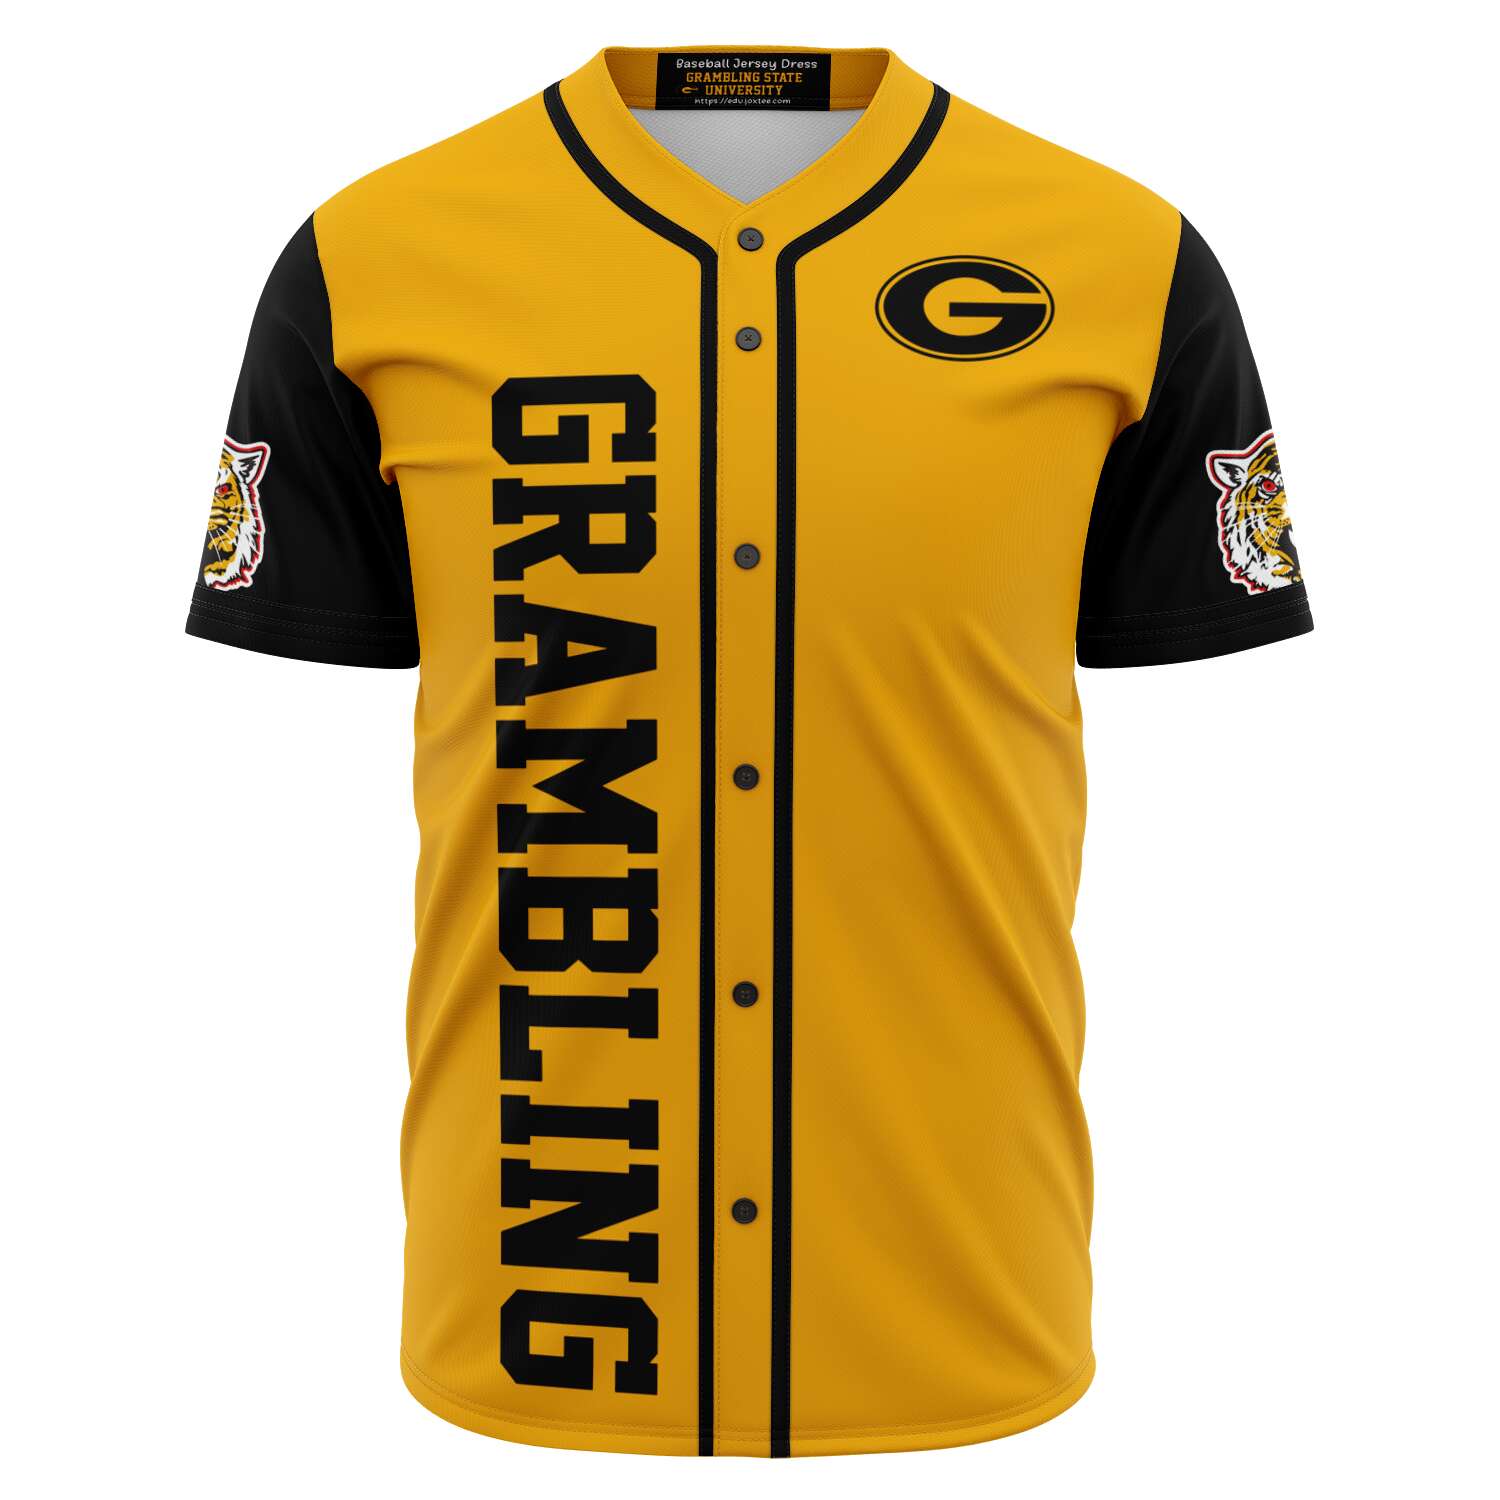 Grambling Tigers baseball jersey v4361 - joxtee